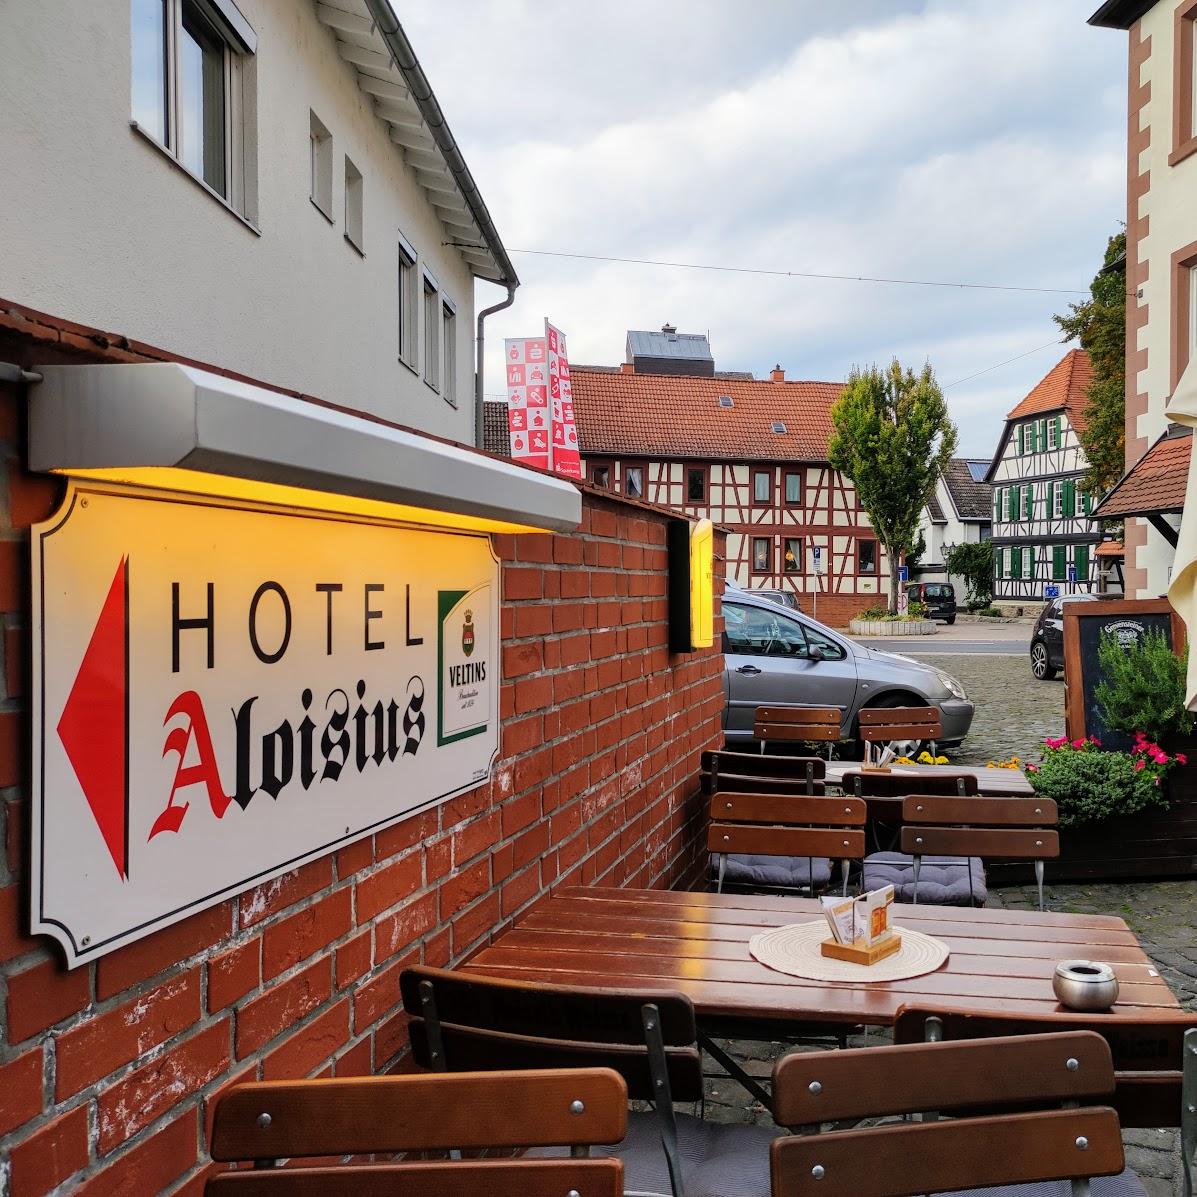 Restaurant "Hotel Aloisius" in Bruchköbel